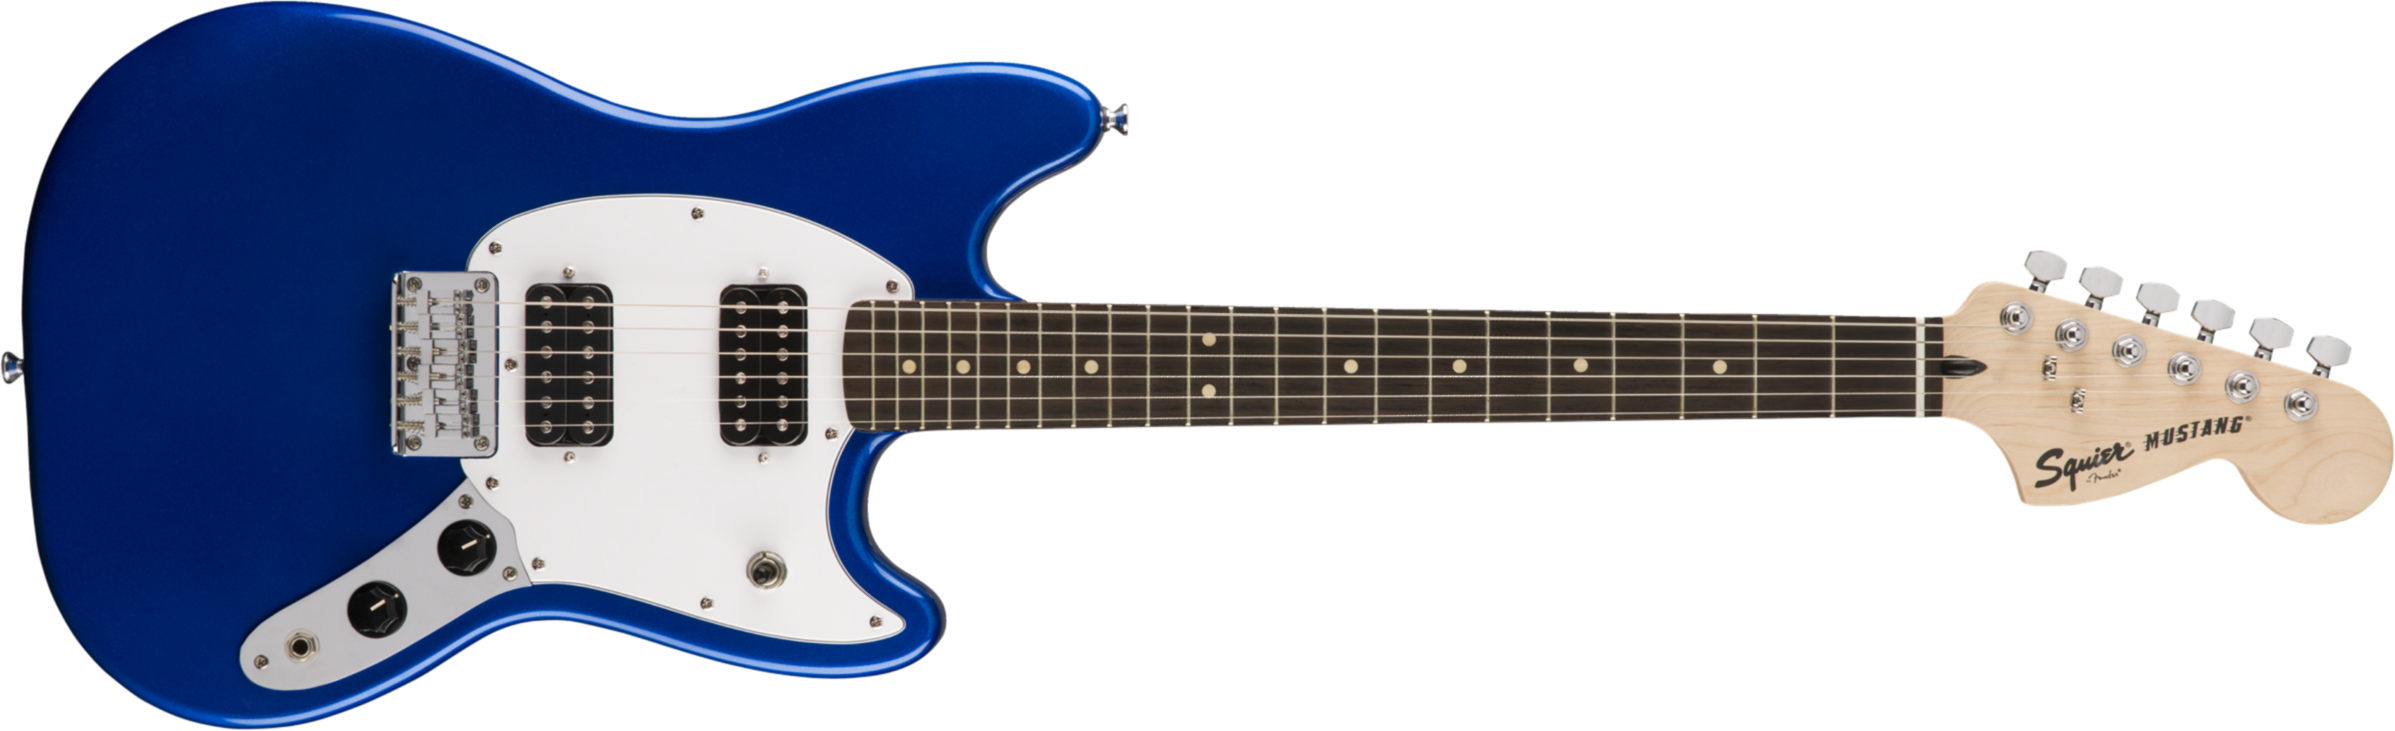 Squier Mustang Bullet Hh 2019 Ht Lau - Imperial Blue - Guitarra electrica retro rock - Main picture